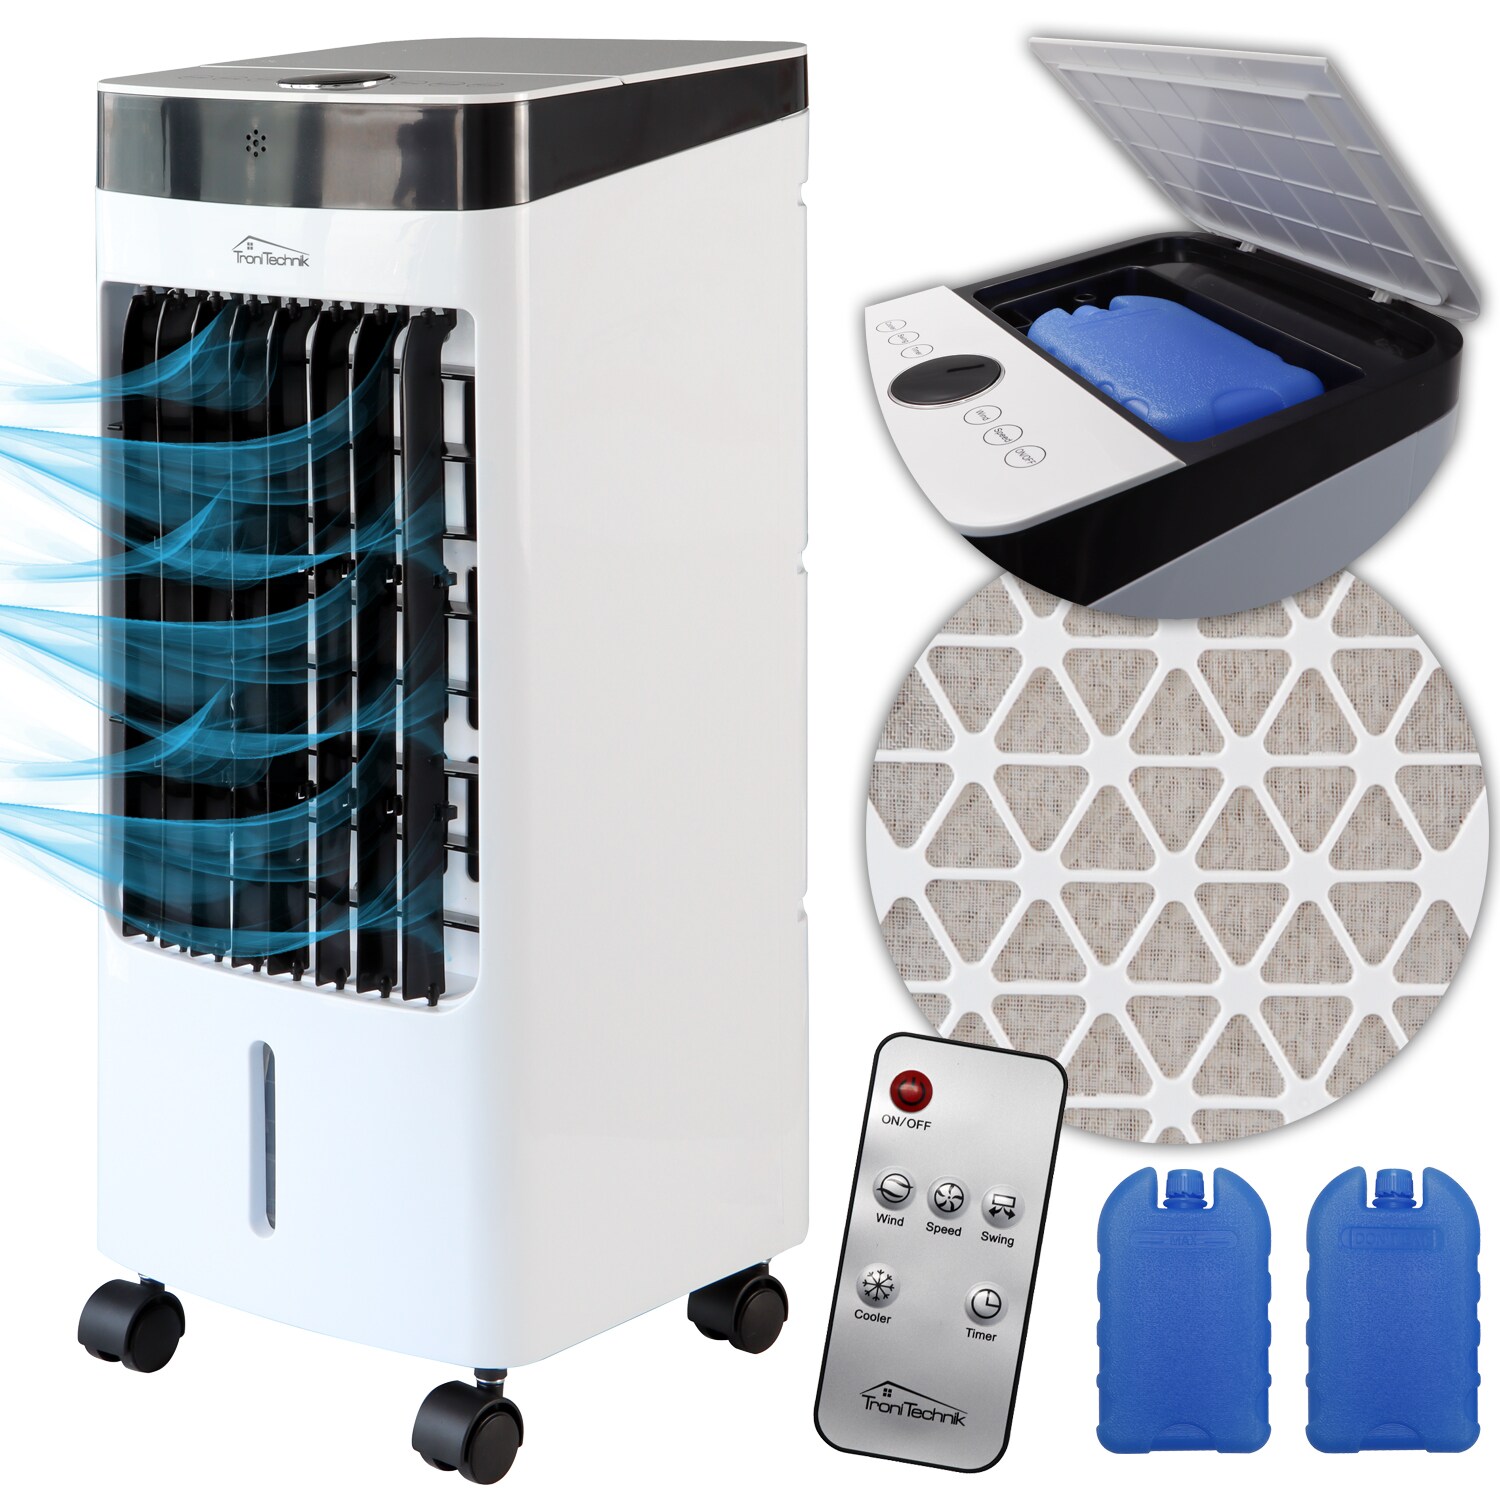 TroniTechnik Mobiles Klimagerät 3in1 Klimaanlage Luftkühler LK04 Ventilator, inkl. Fernbedienung und Filter